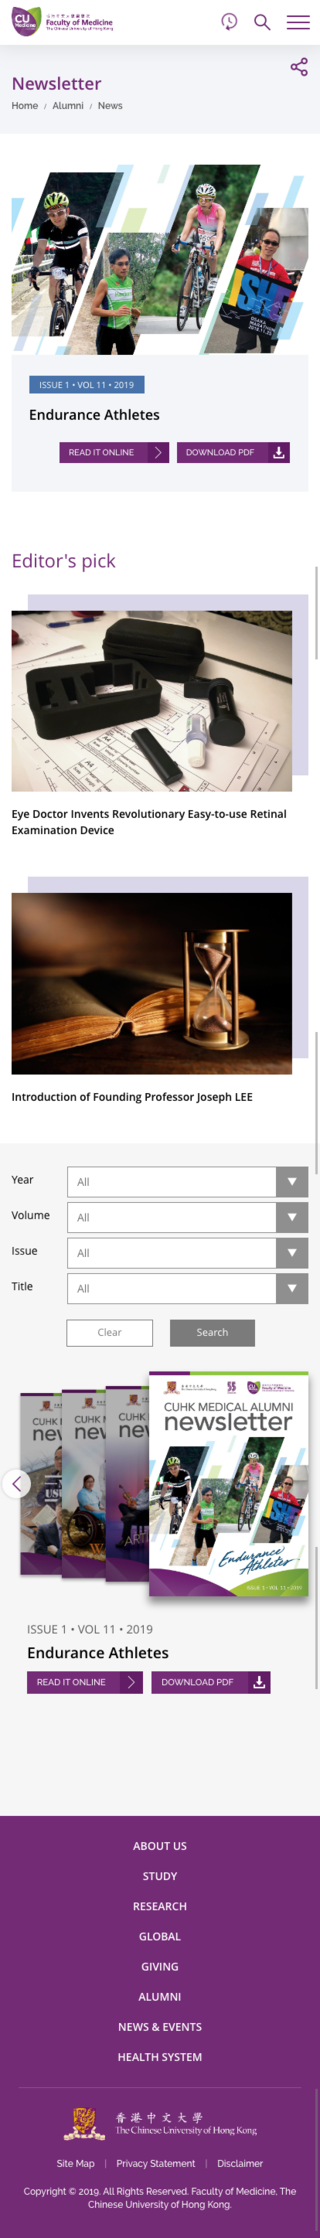 Chinese University of Hong Kong website screenshot for mobile version 3 of 4